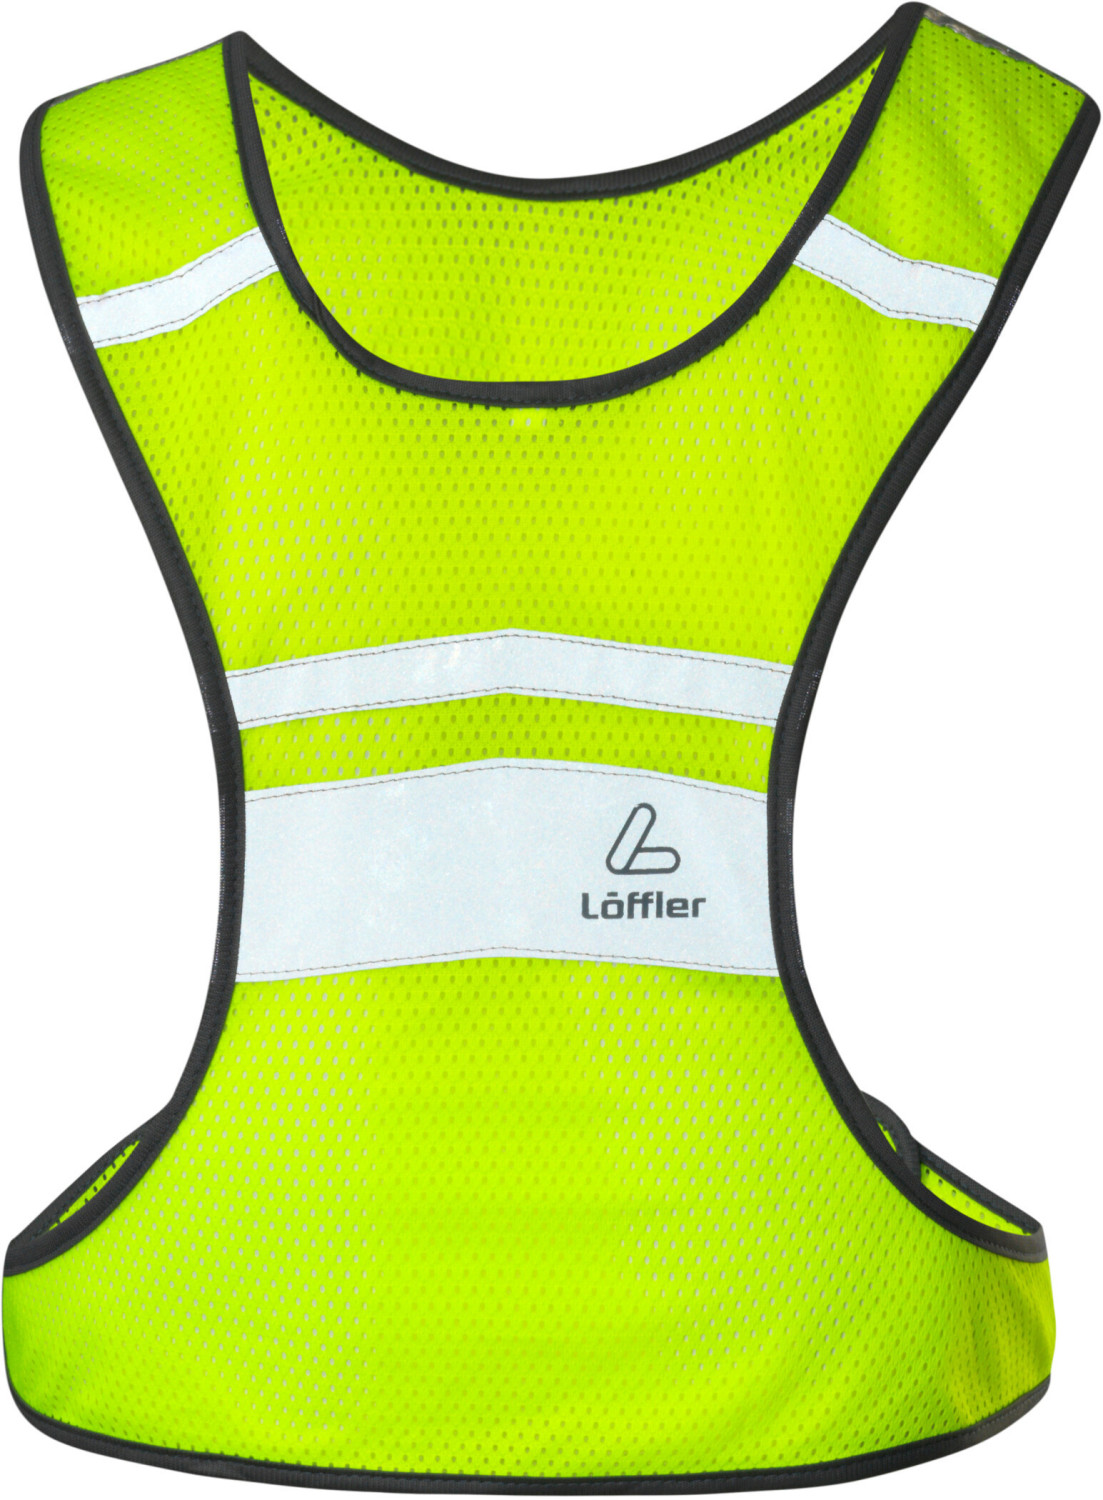 Löffler Reflex Vest neon yellow ab 13,00 €